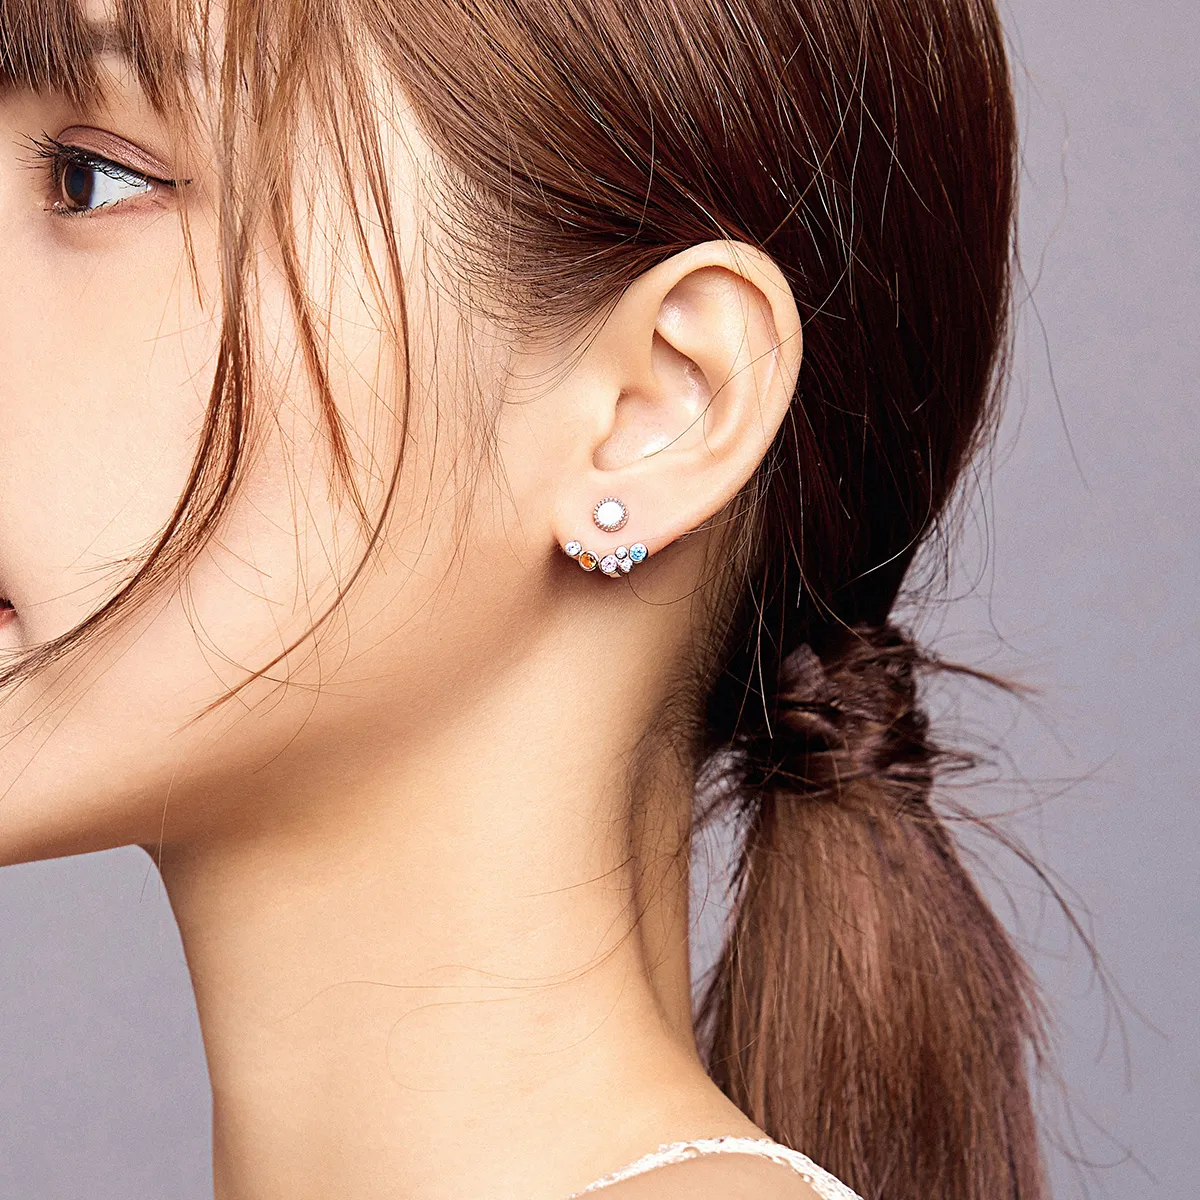 Pandora Style Silver Coloful Bubbles Stud Earrings - BSE392